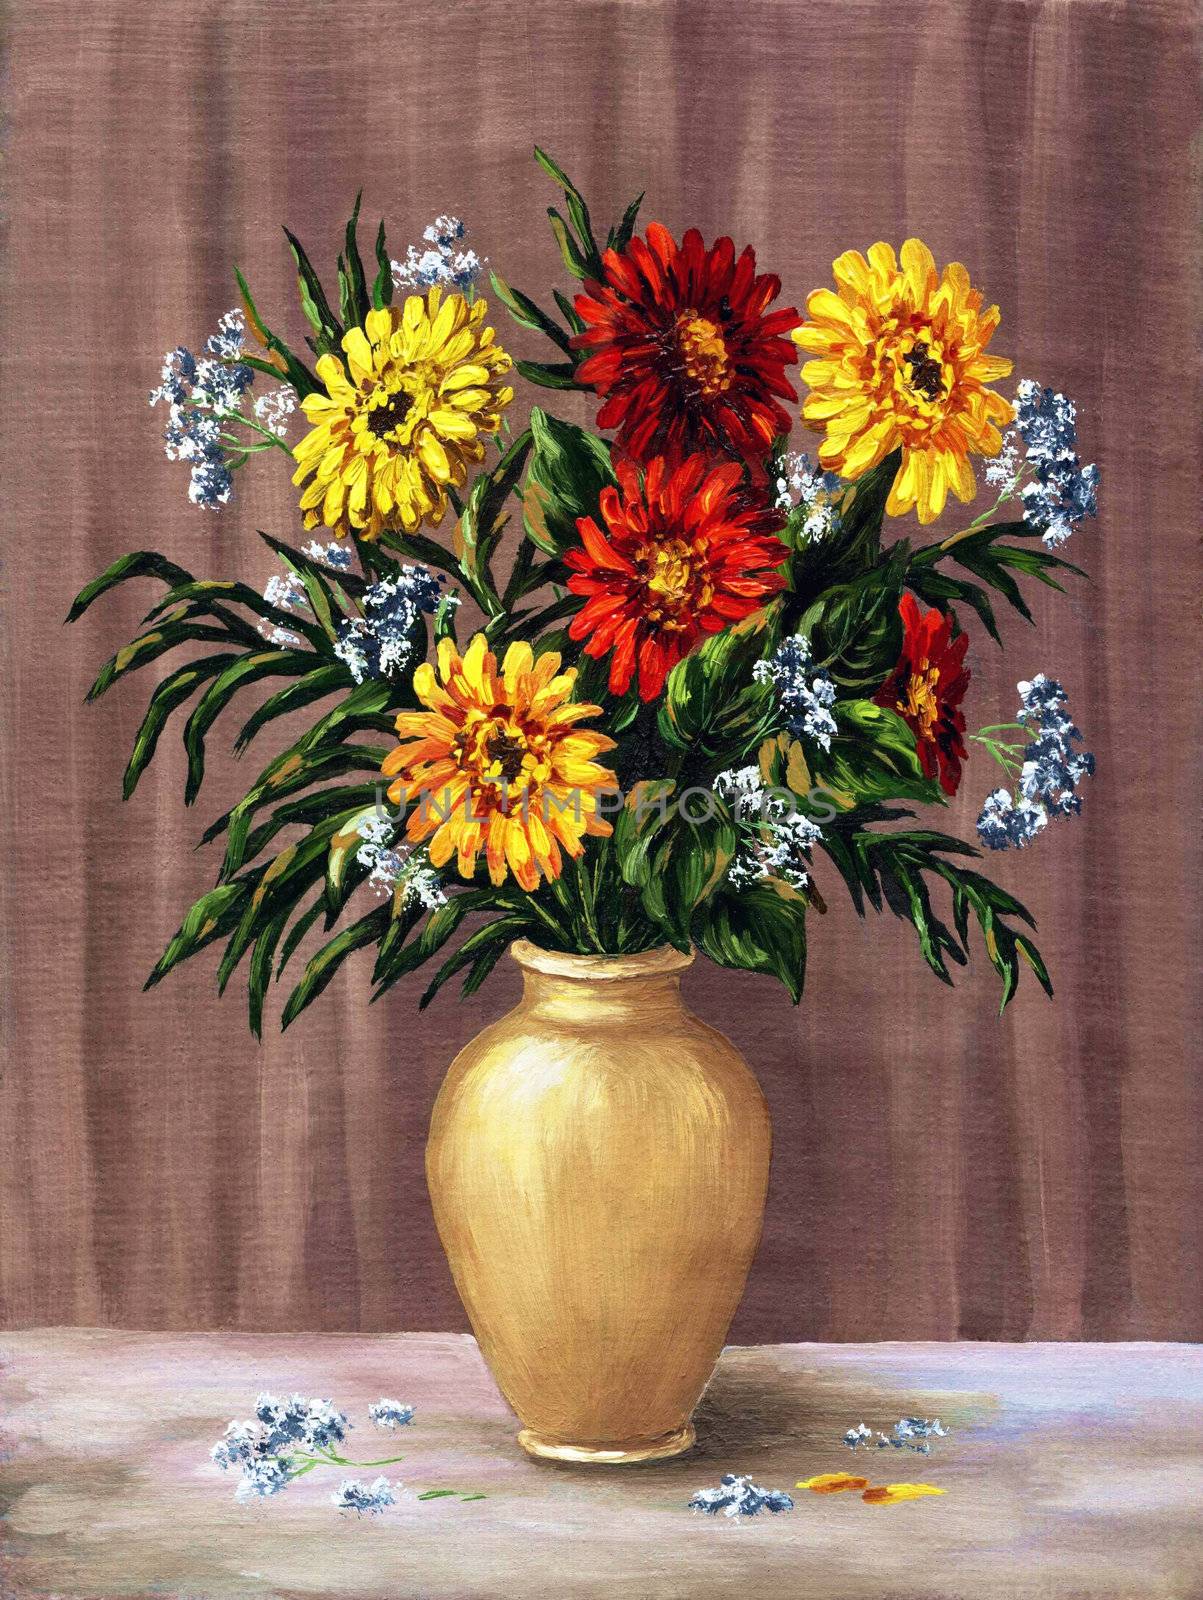 Flowers in a jug by alexcoolok